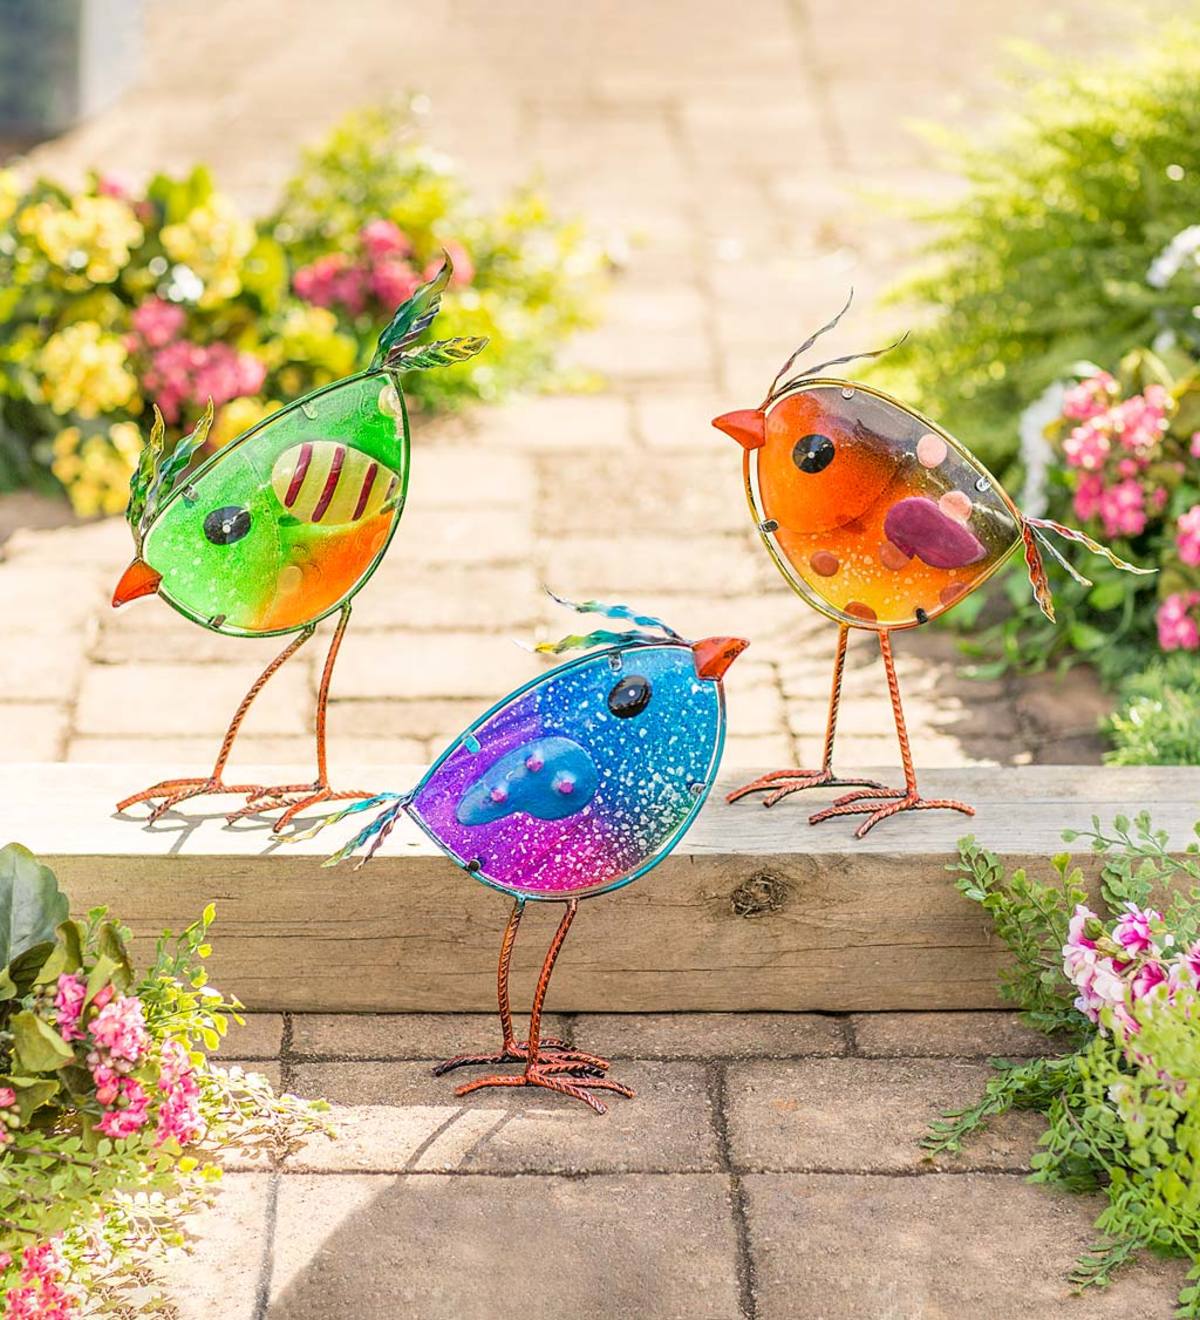 Indoor/Outdoor Metal and Colorful Iridescent Glass Bird Statues